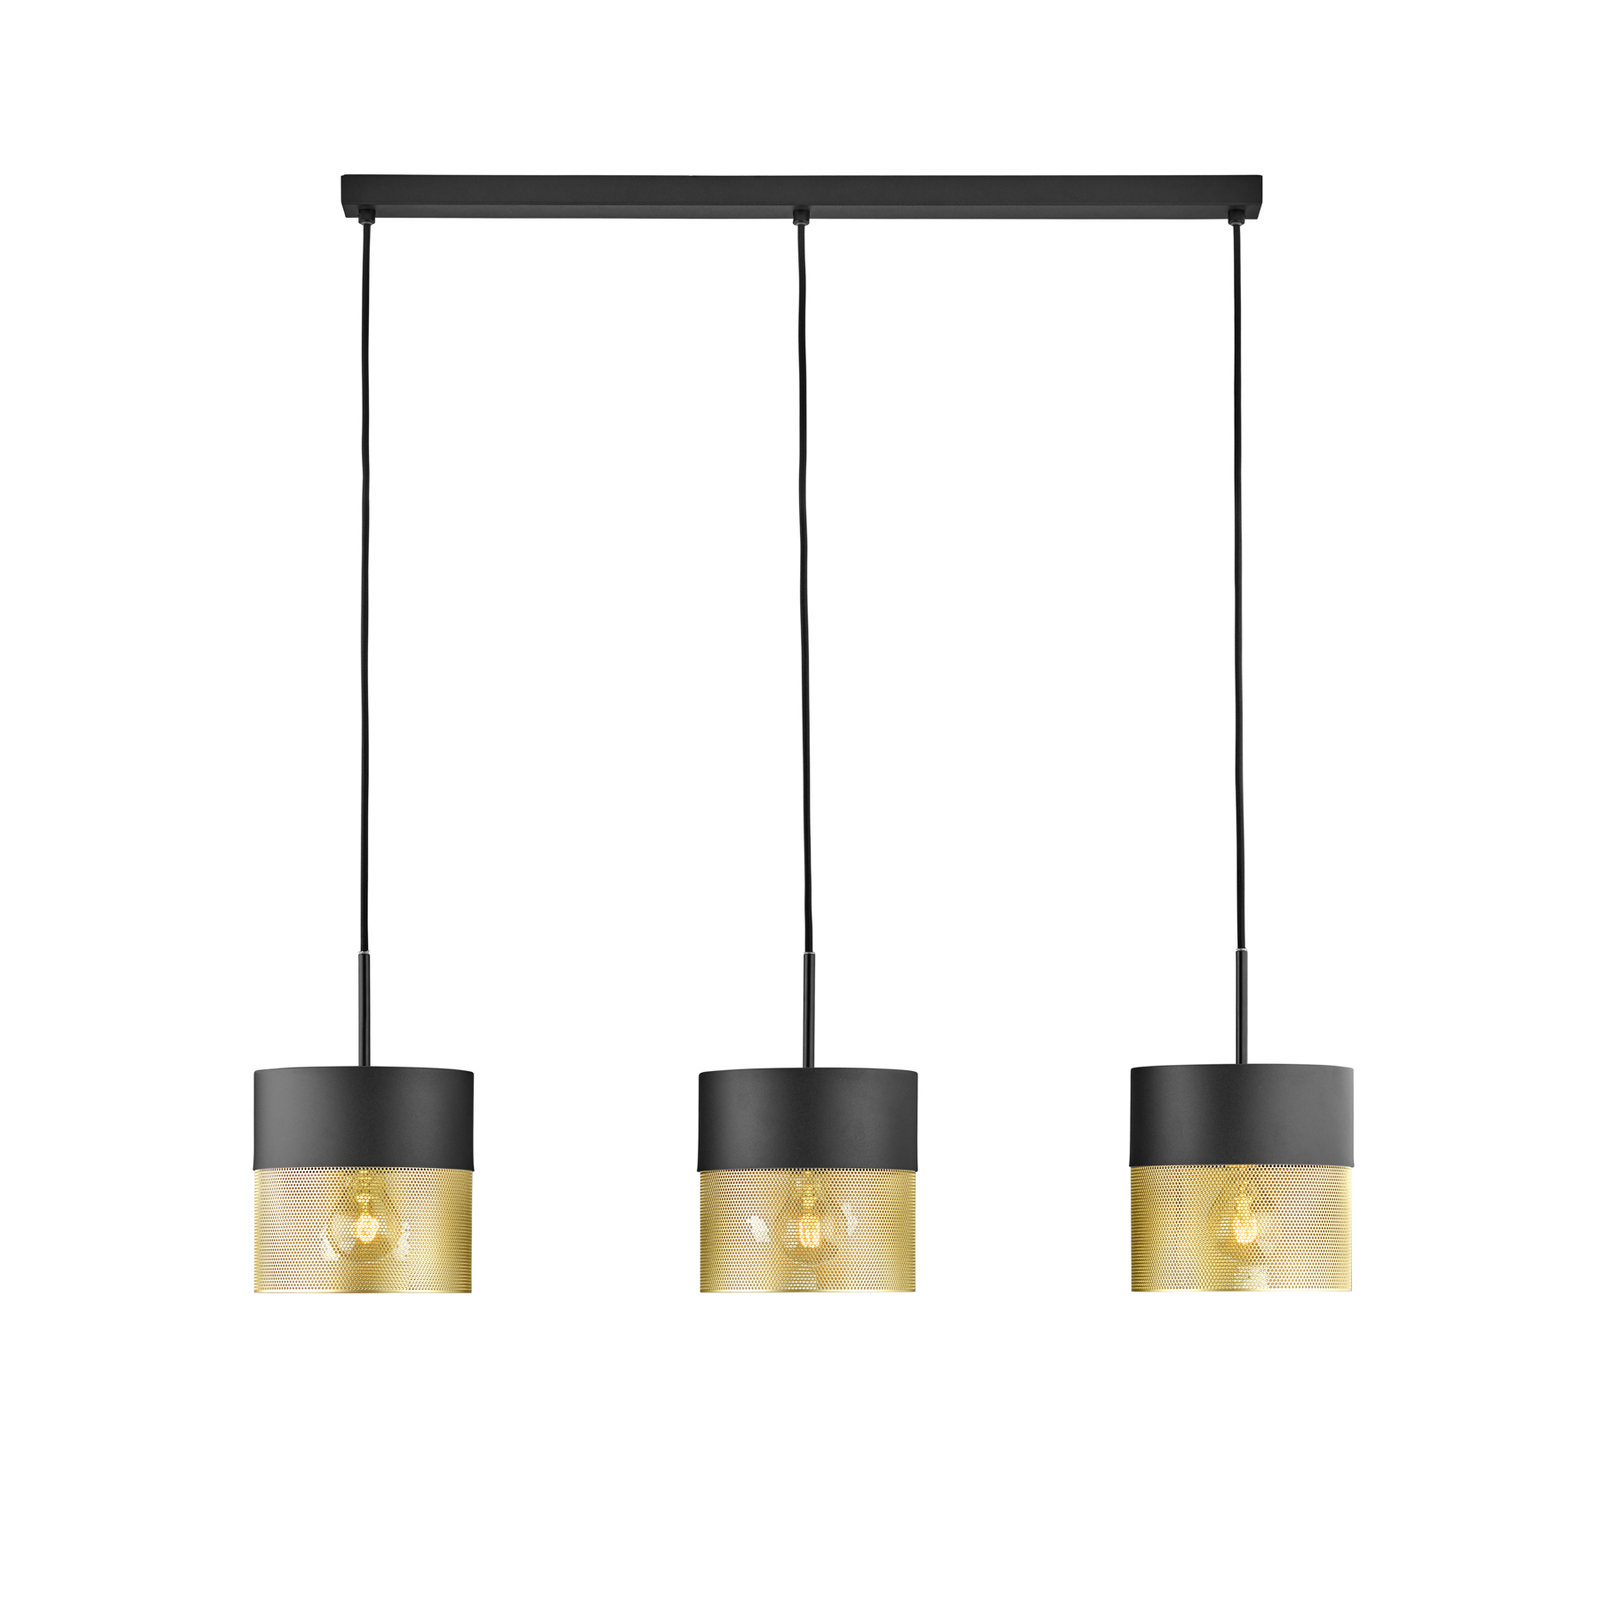 Mesh pendant light E27 3-bulb high, black/gold